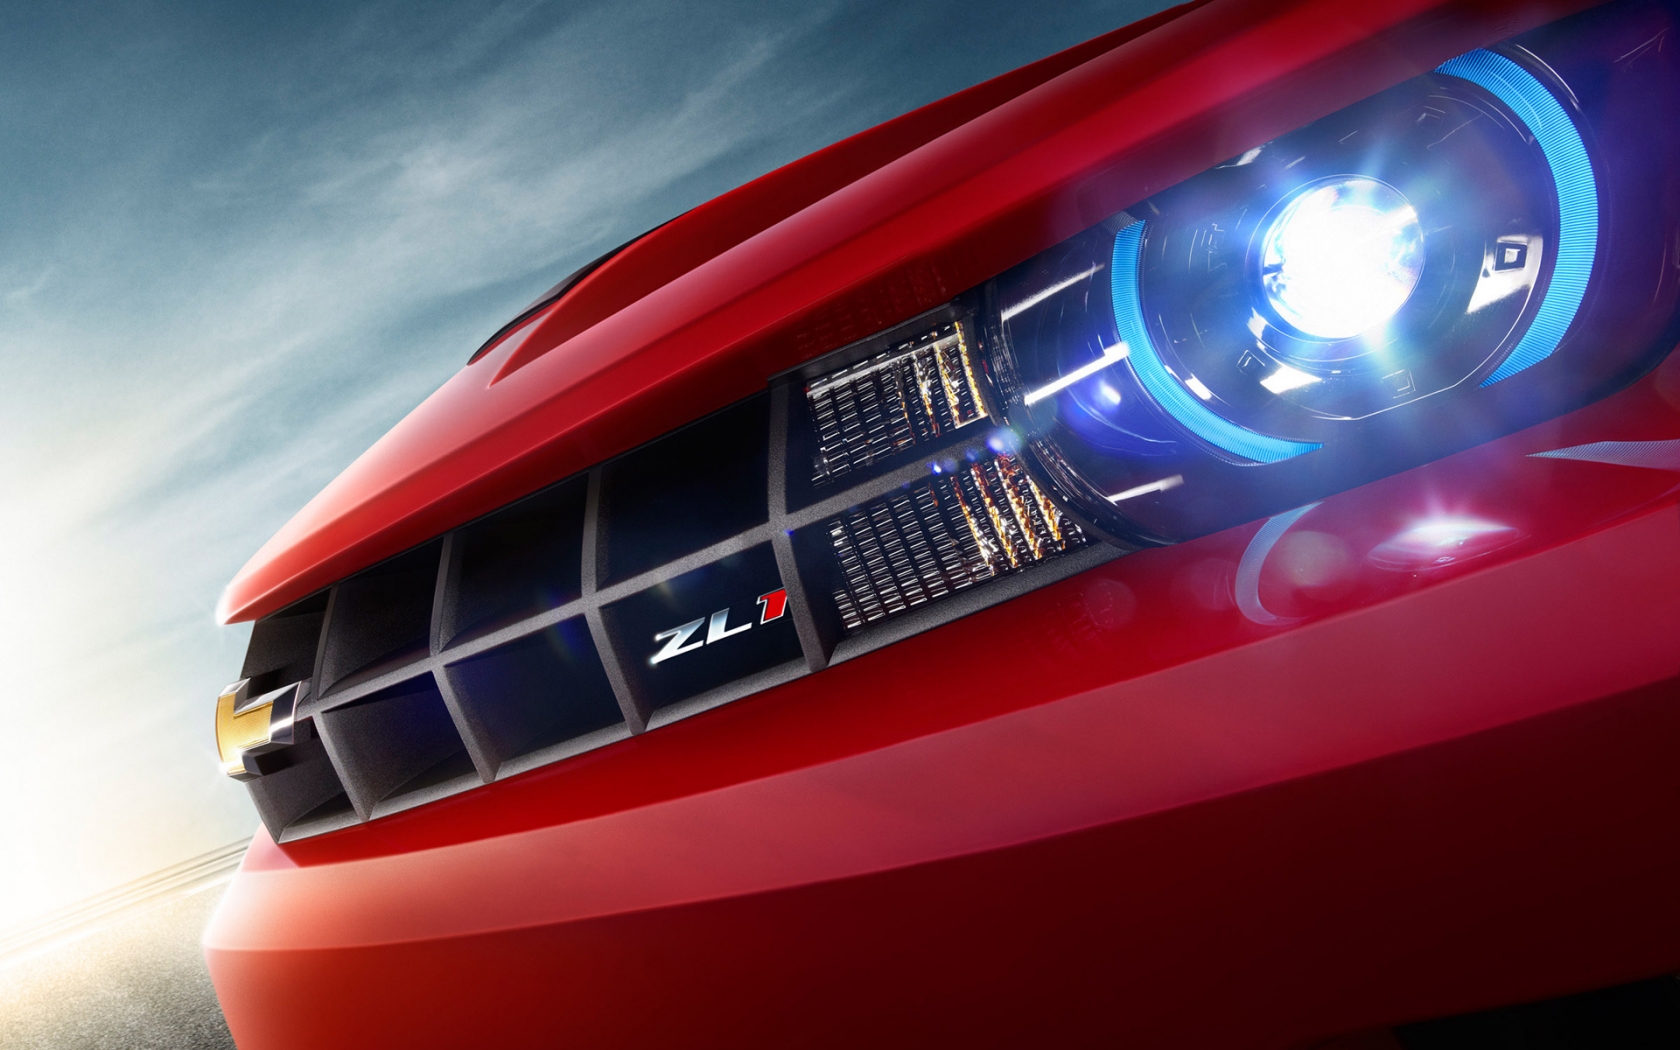 2012 Chevy Camaro ZL1 Headlight for 1680 x 1050 widescreen resolution